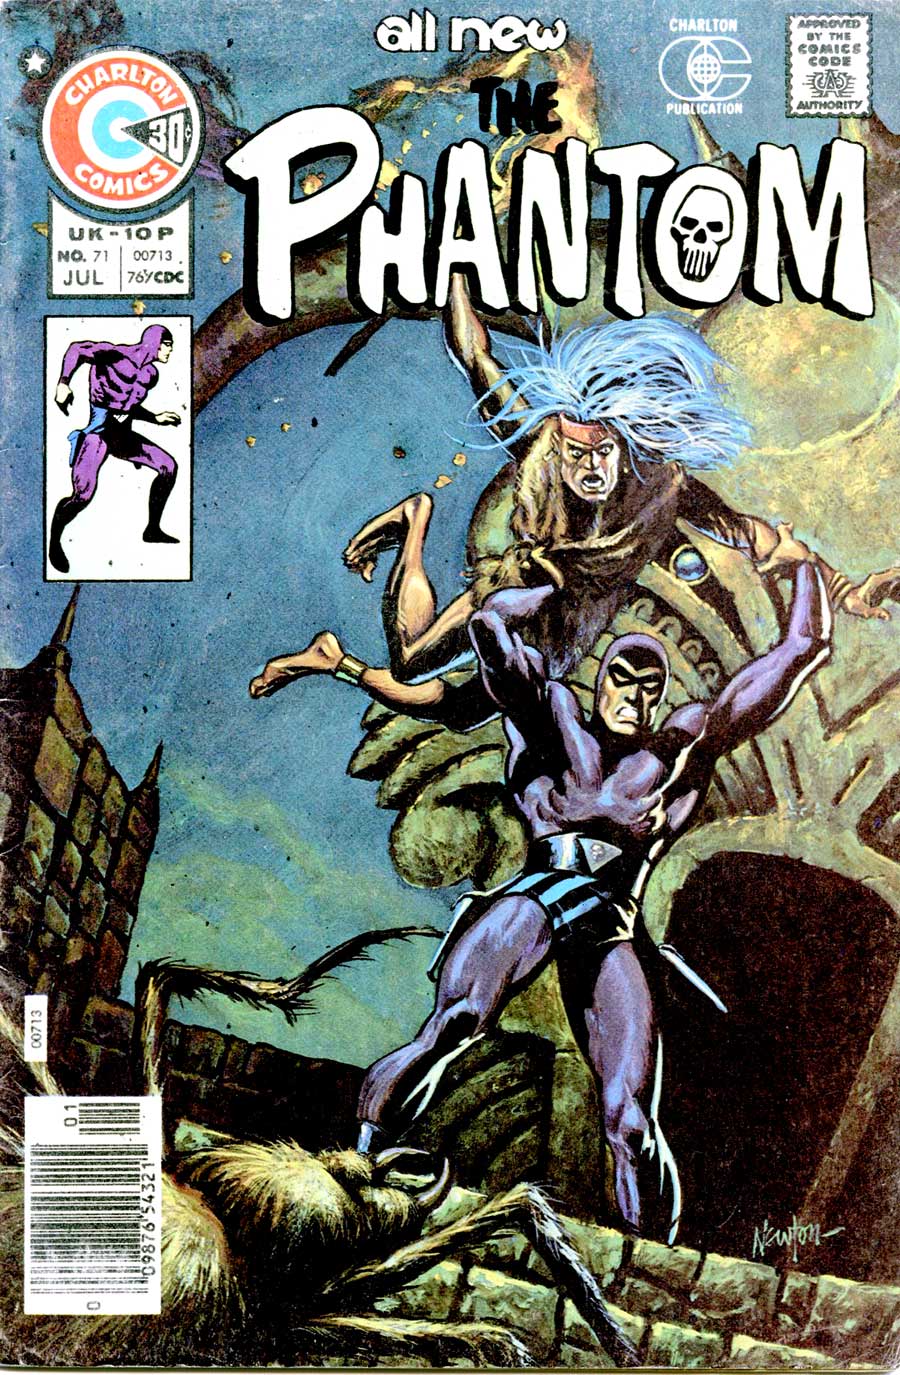 The Phantom v2 #71 charlton comic book cover art by Don Newton